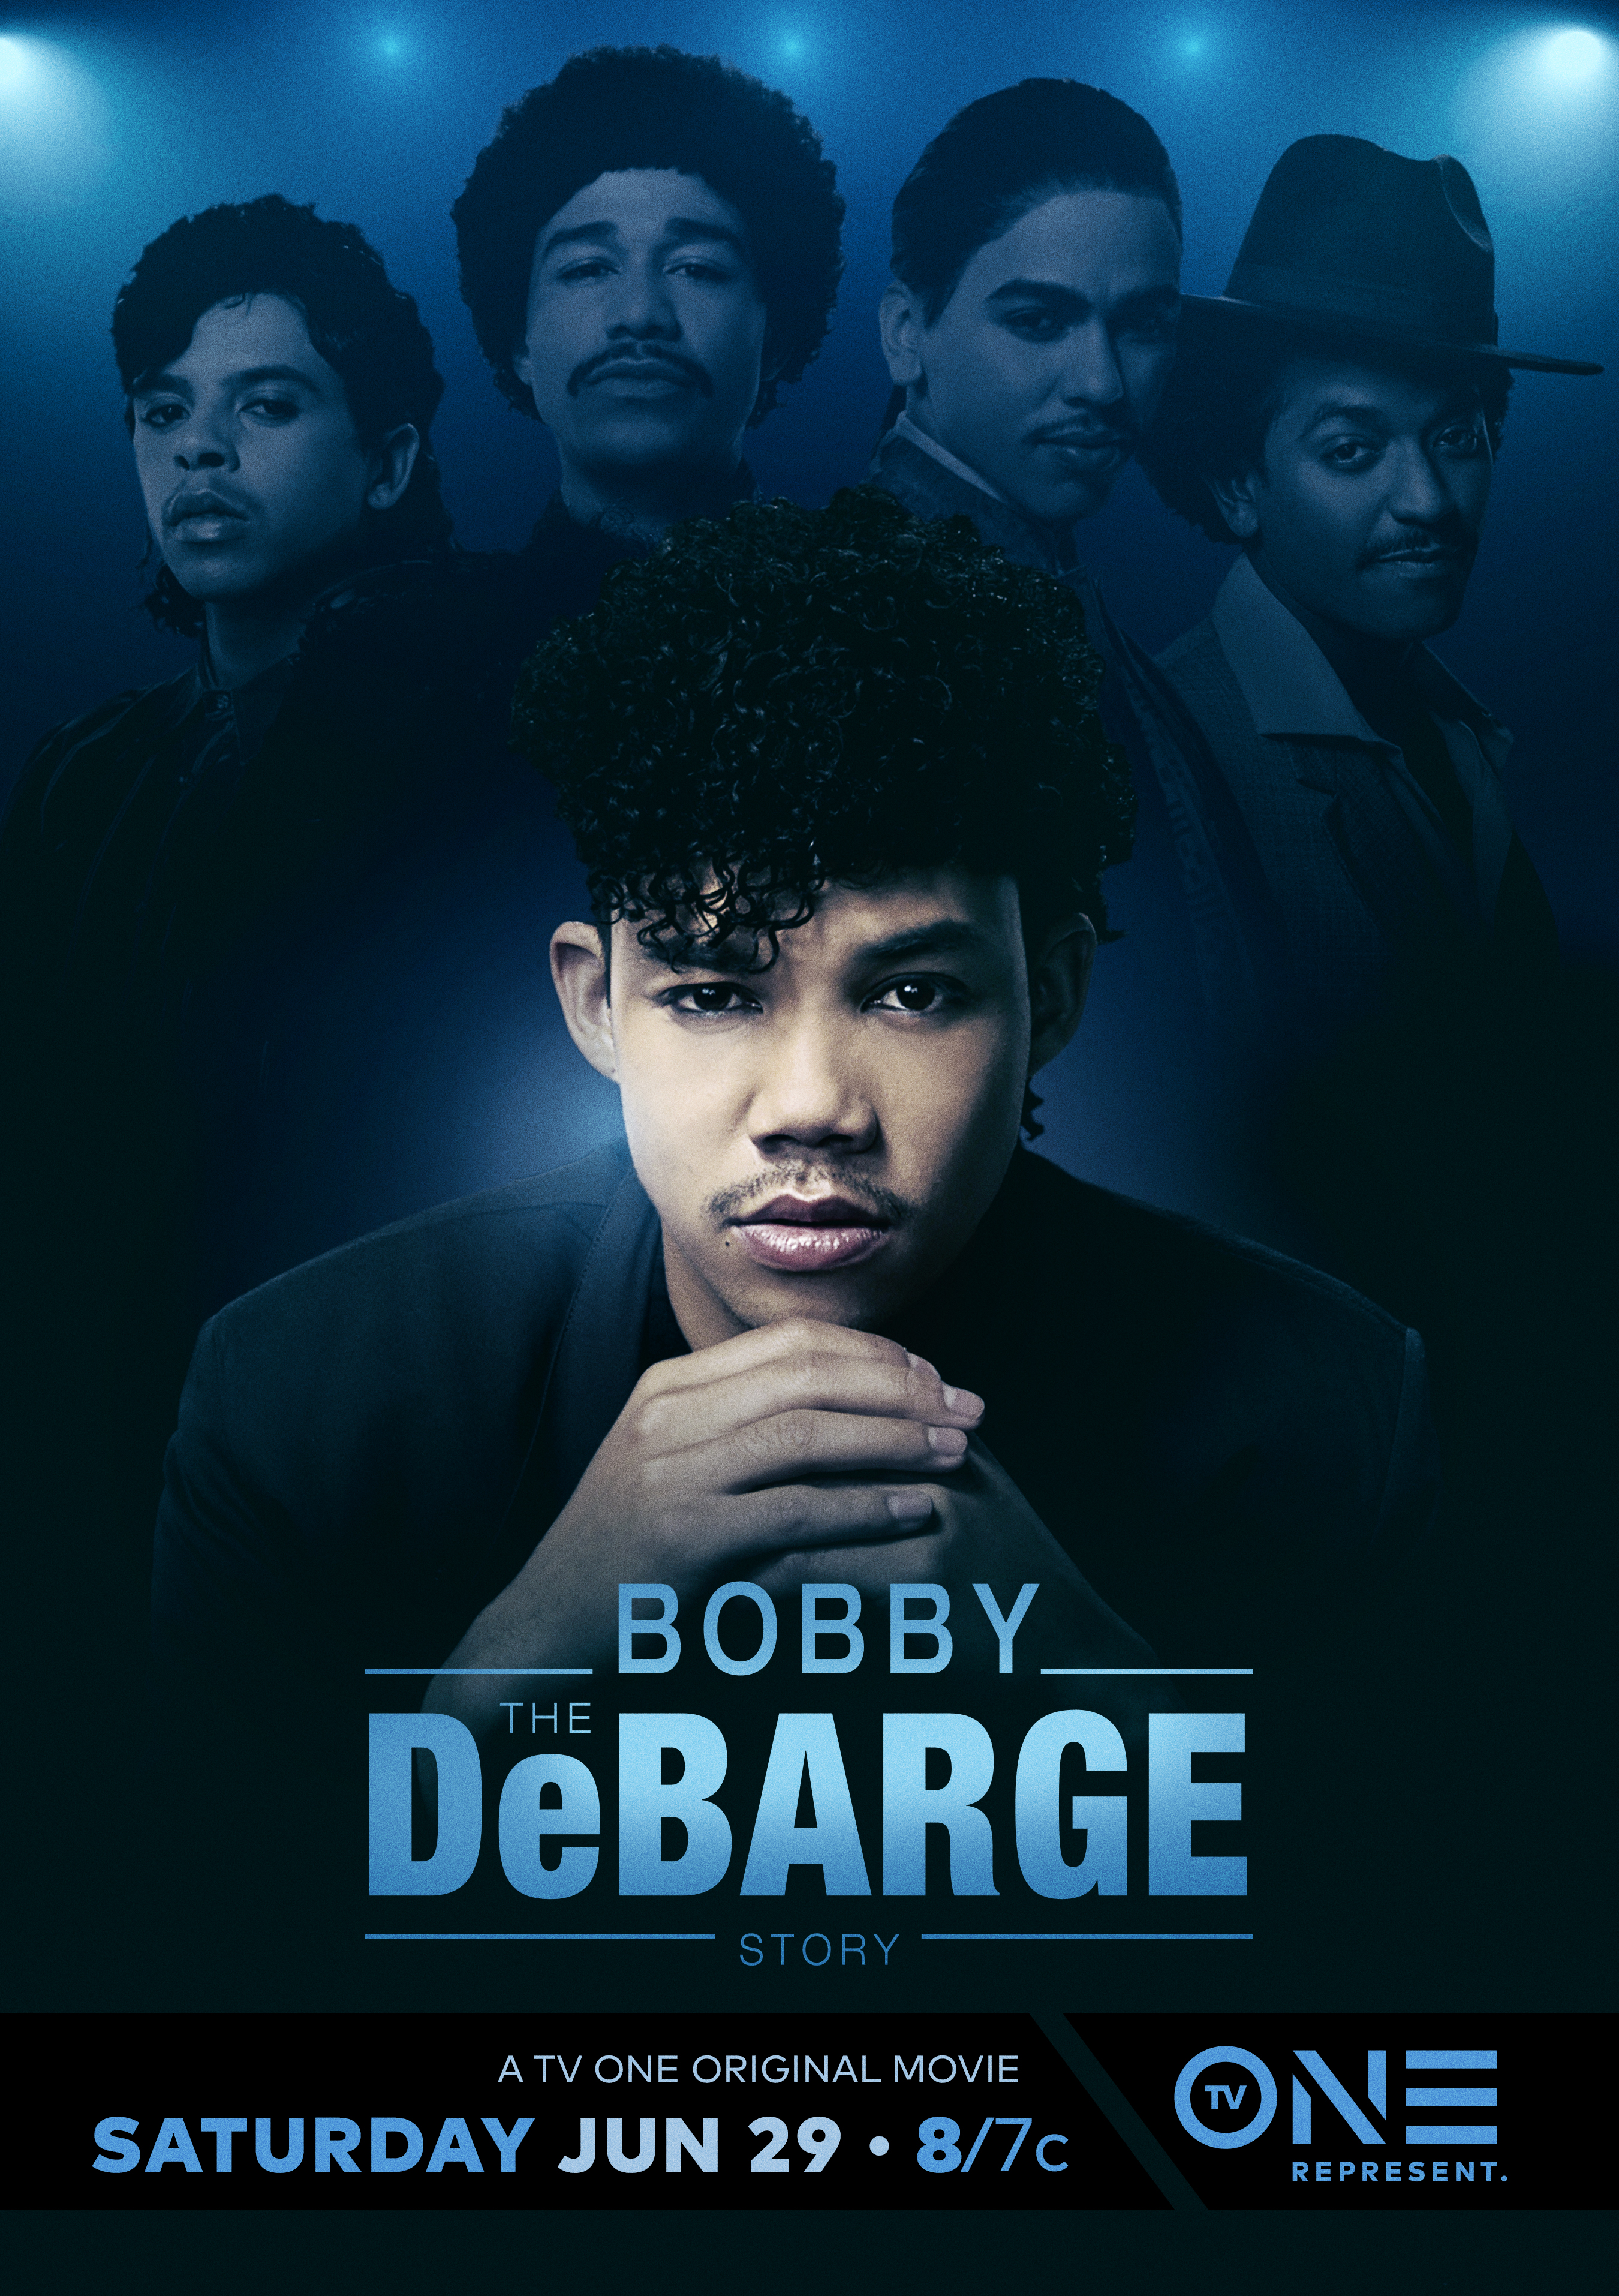 Nonton film The Bobby DeBarge Story layarkaca21 indoxx1 ganool online streaming terbaru